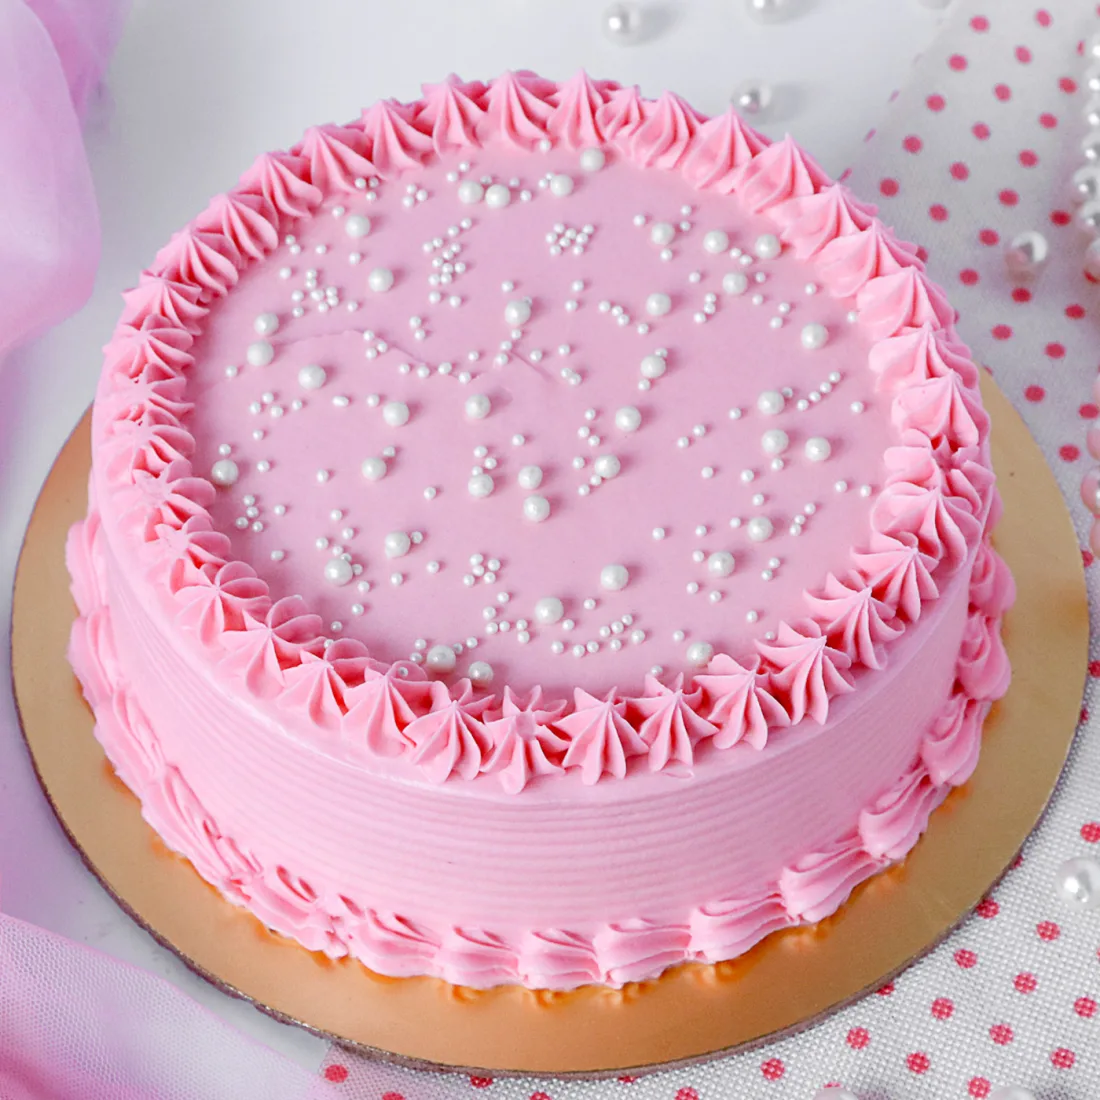 Strawberry Birthday Cake 1 Kg by Cake Square | Send Cakes Online | Eggless  Fruit Cakes - Cake Square Chennai | Cake Shop in Chennai